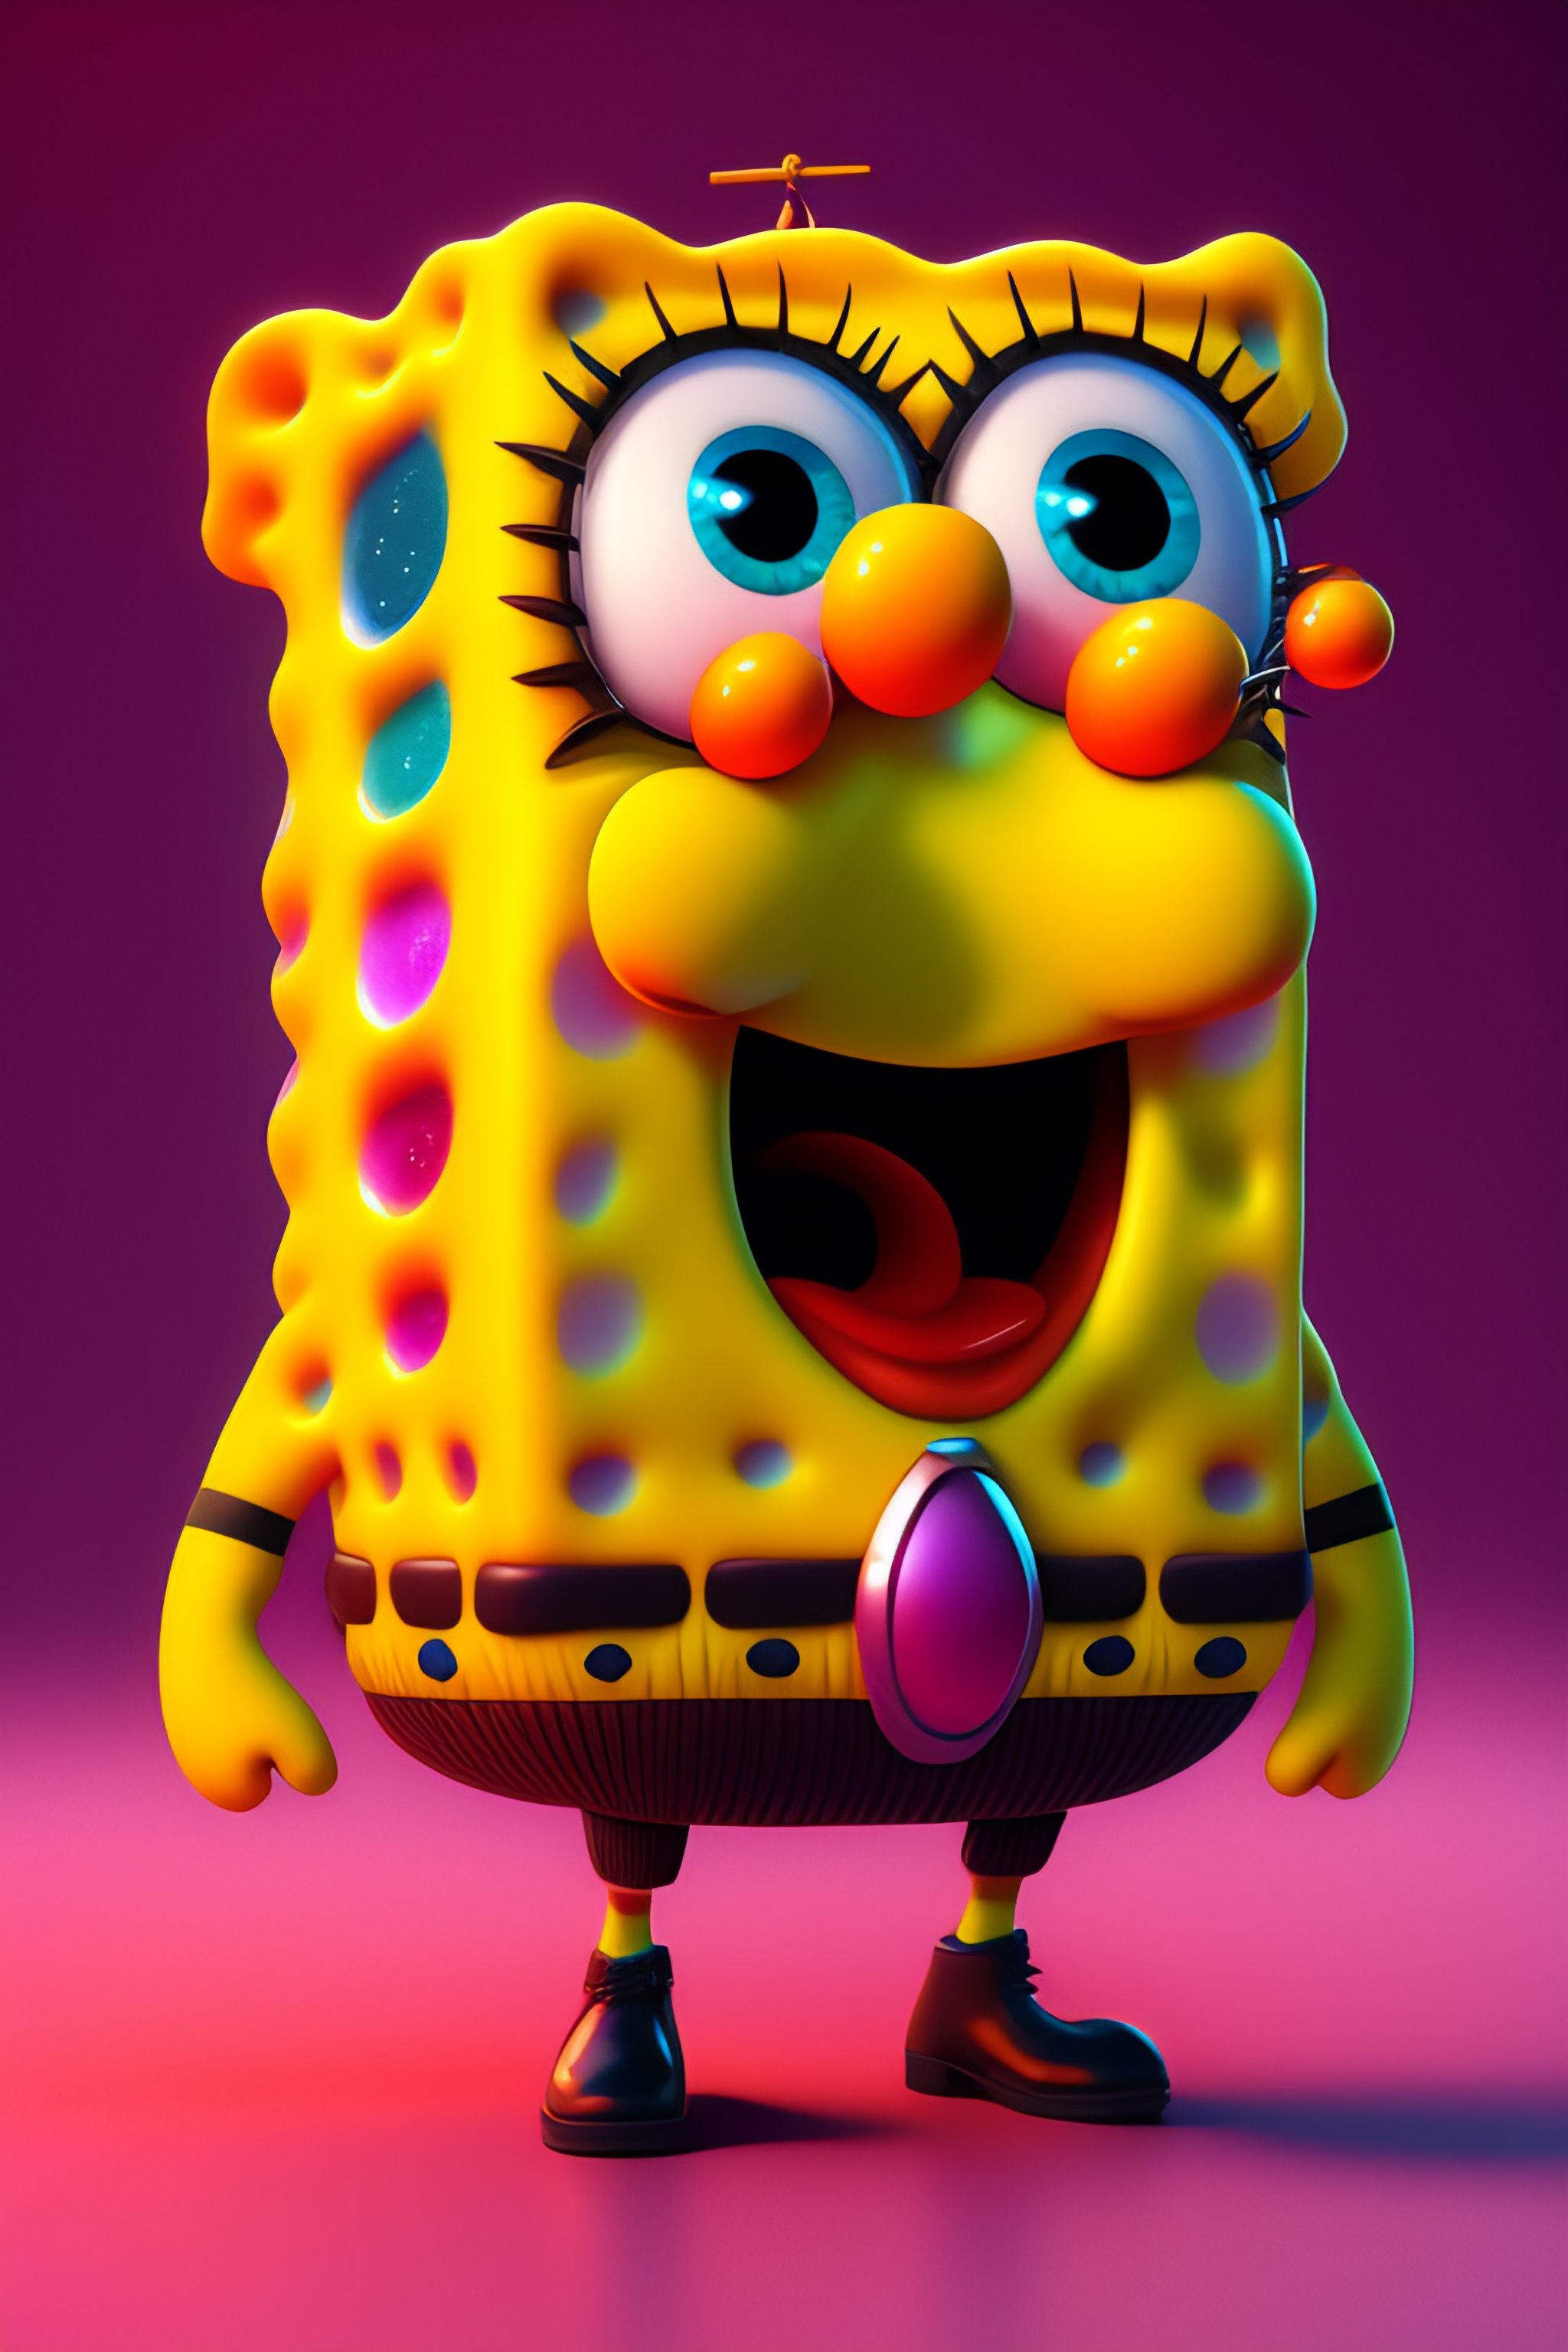 spongebob real life movie